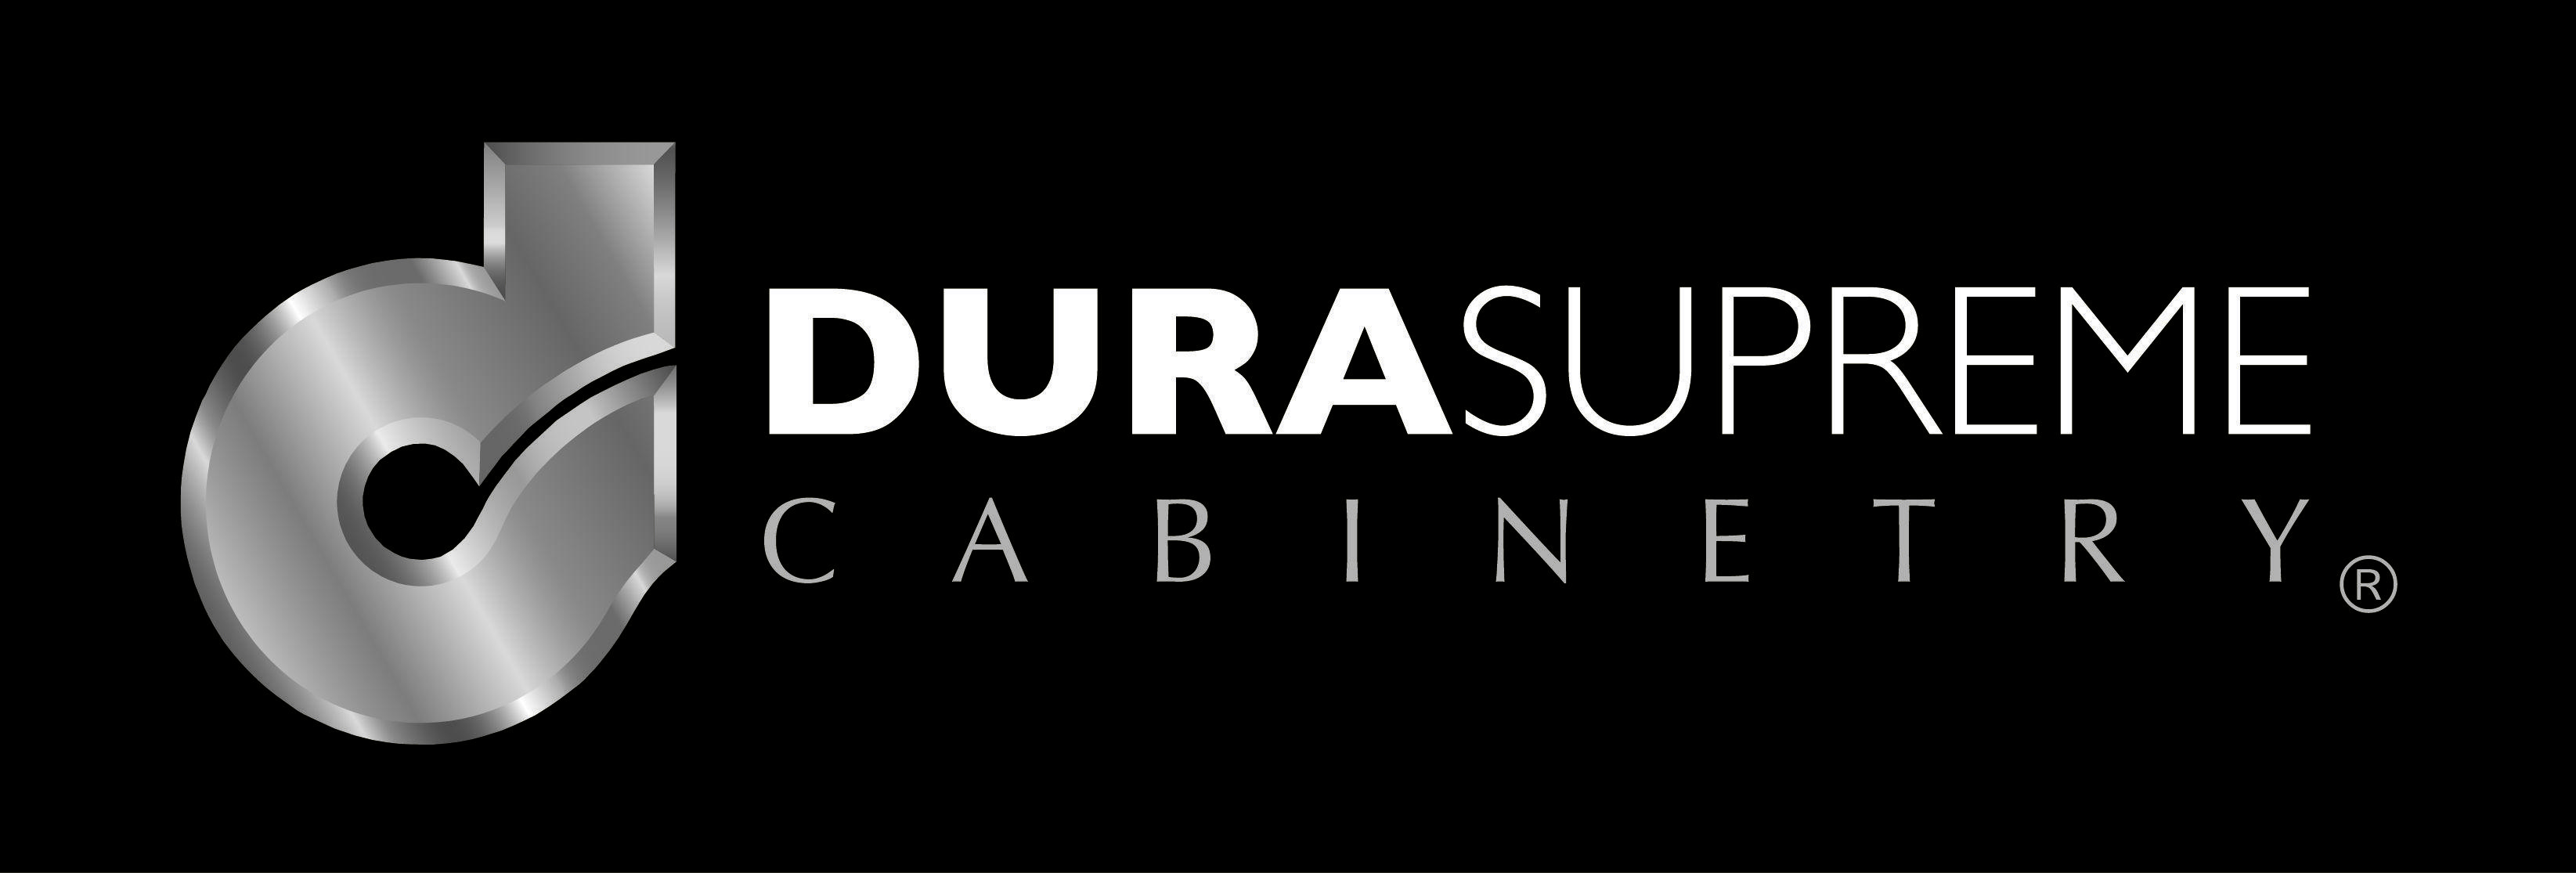 Dura Supreme Logo - Logo Files | Dura Supreme Cabinetry | Dura Supreme Cabinetry